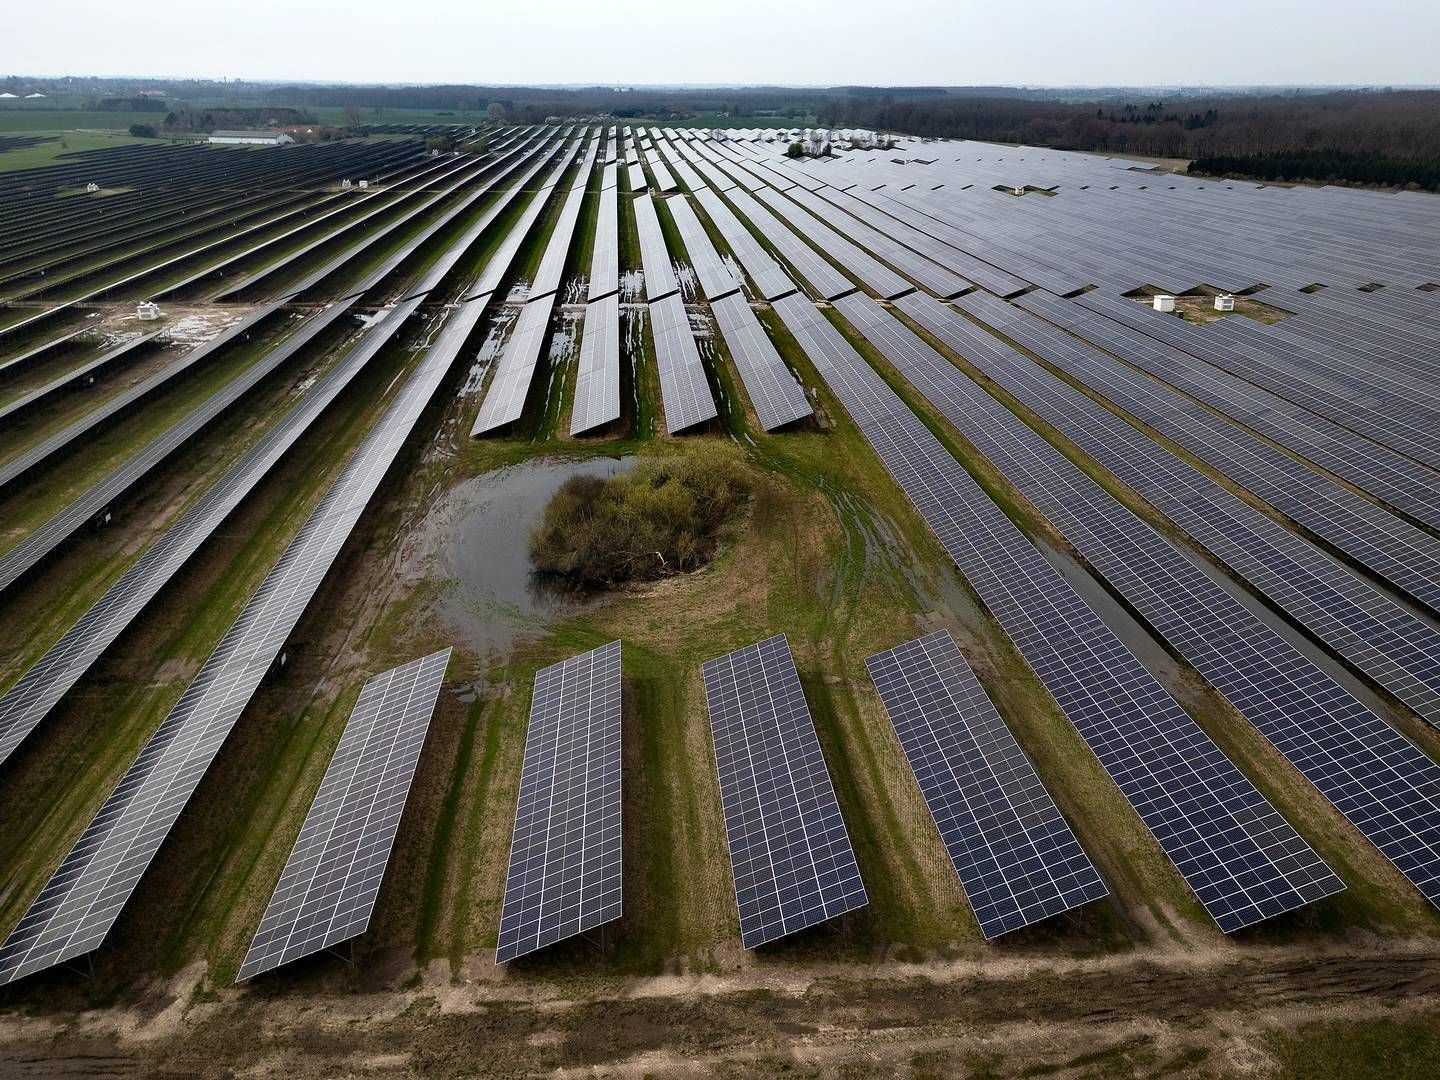 A solar power plant in Haslev, Denmark. | Photo: Finn Frandsen